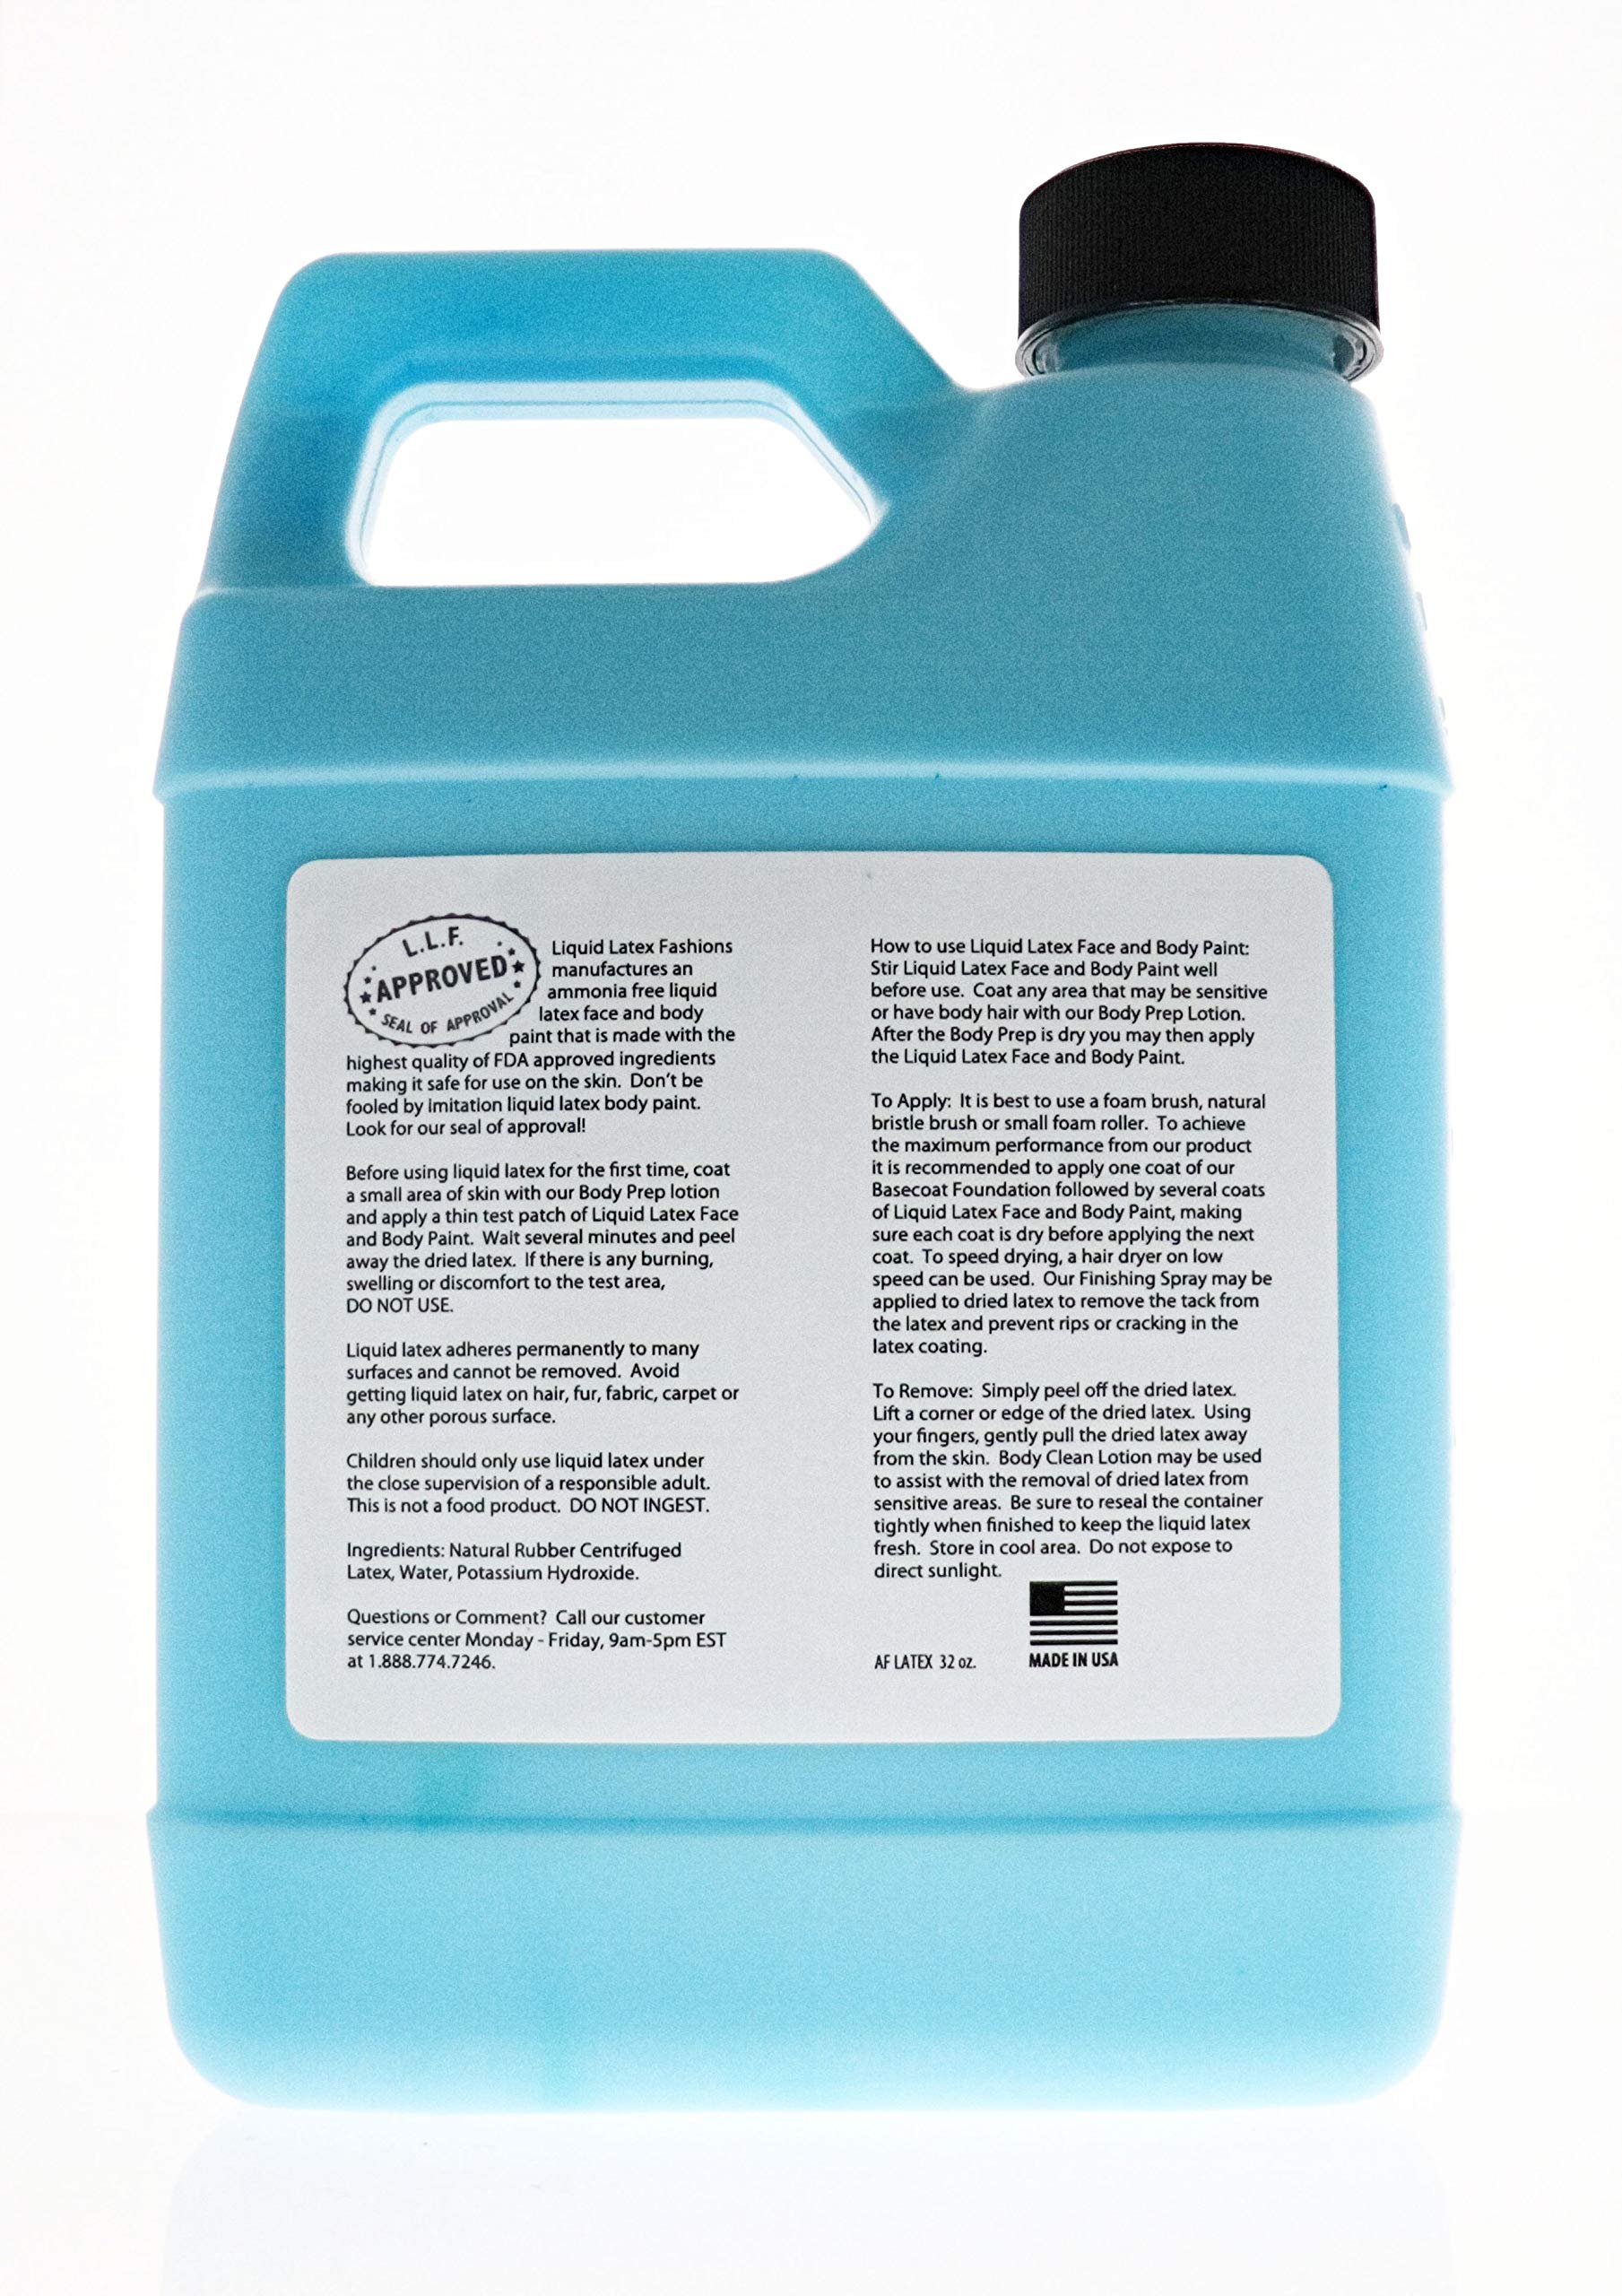 Liquid Latex Fashions Ammonia Free Liquid Latex Body Paint - 32oz Teal